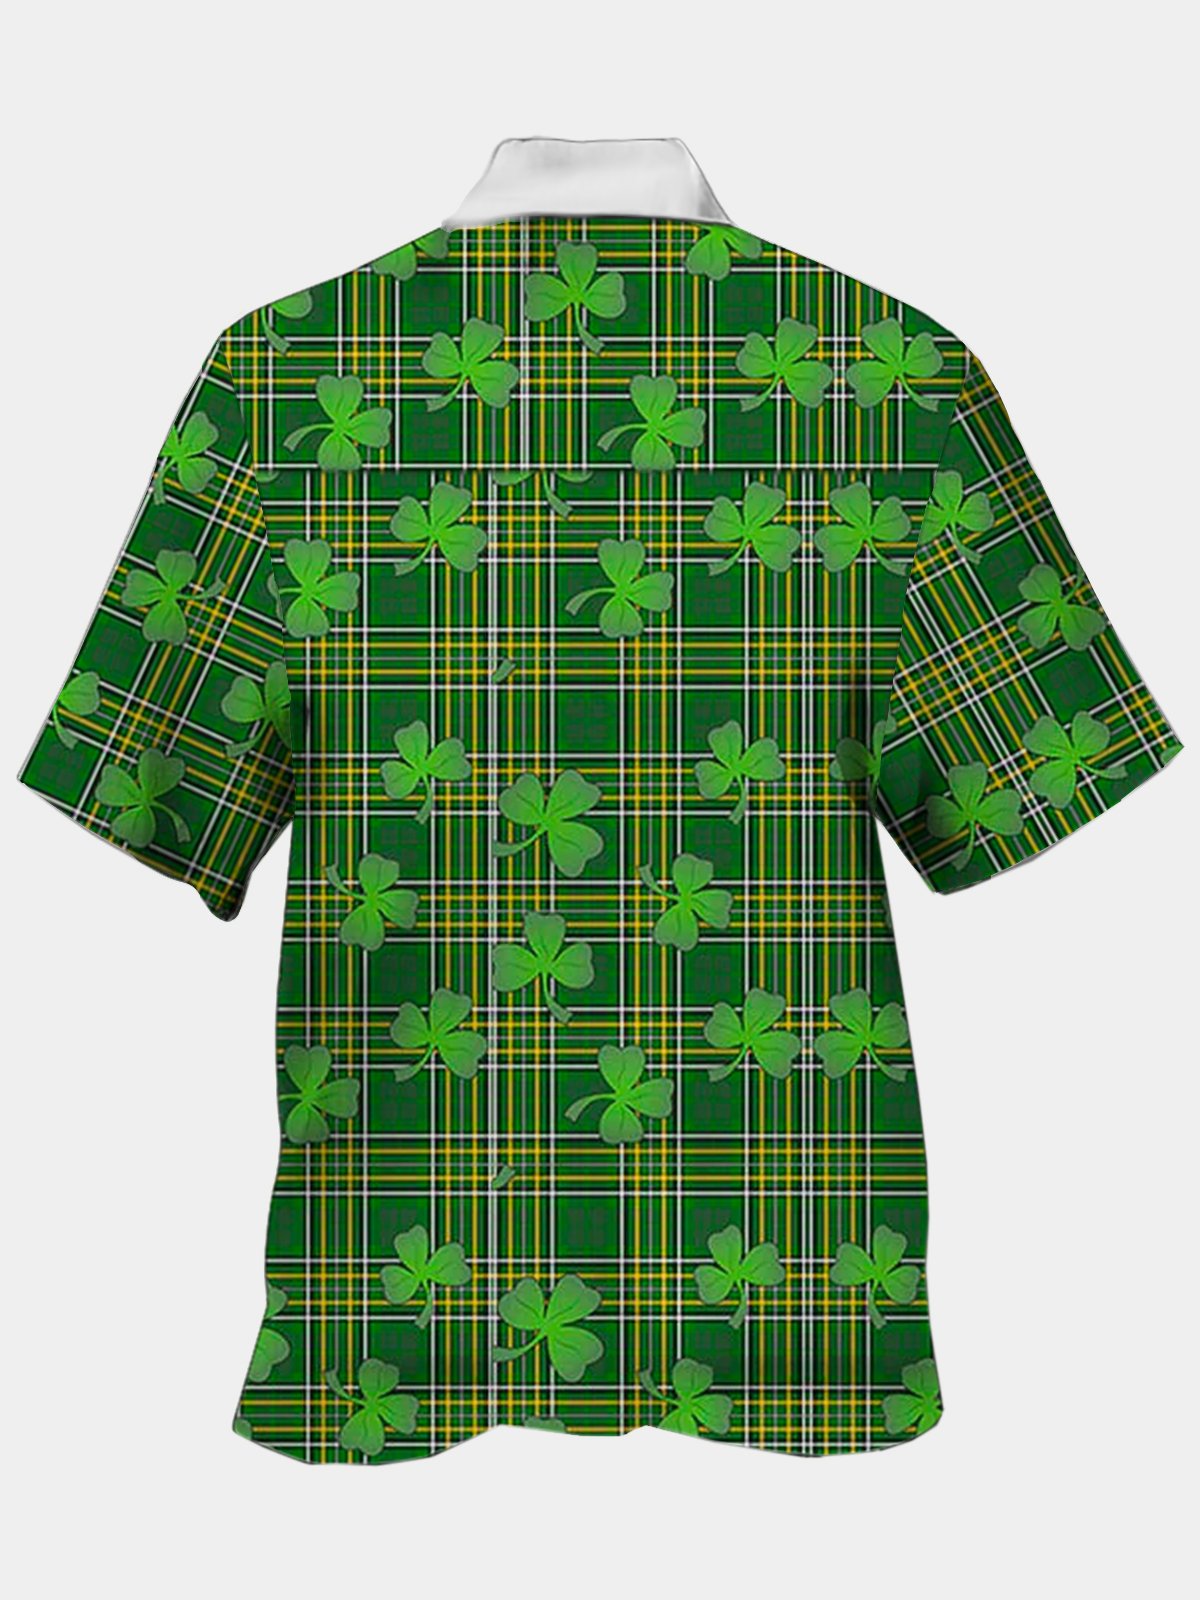 Royaura Fun Irish St. Patrick's Day Green Shamrock Hawaiian Shirt Oversized Vacation Aloha Shirt